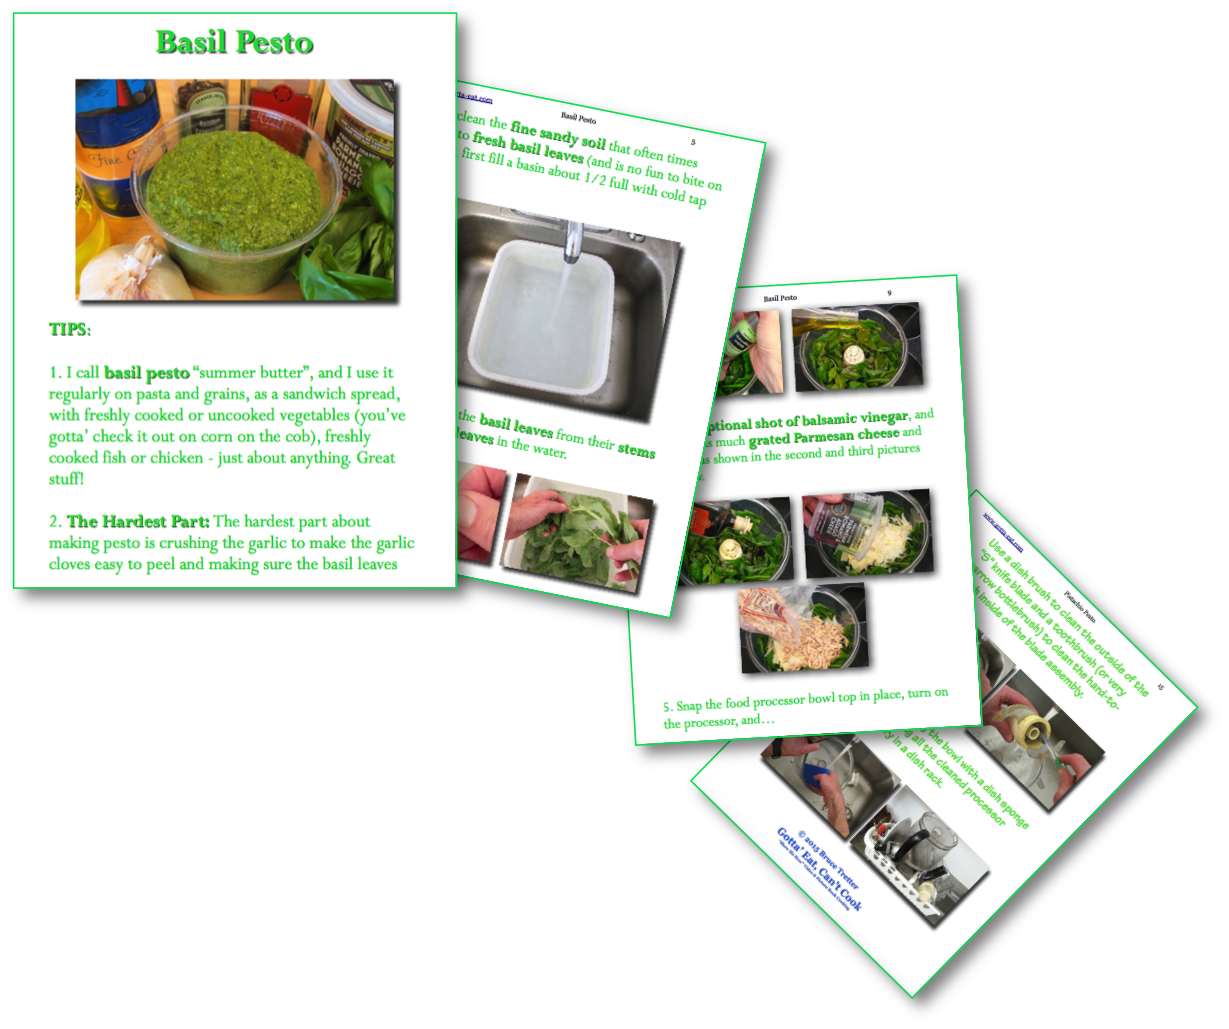 Basil Pesto Picture Book Recipe